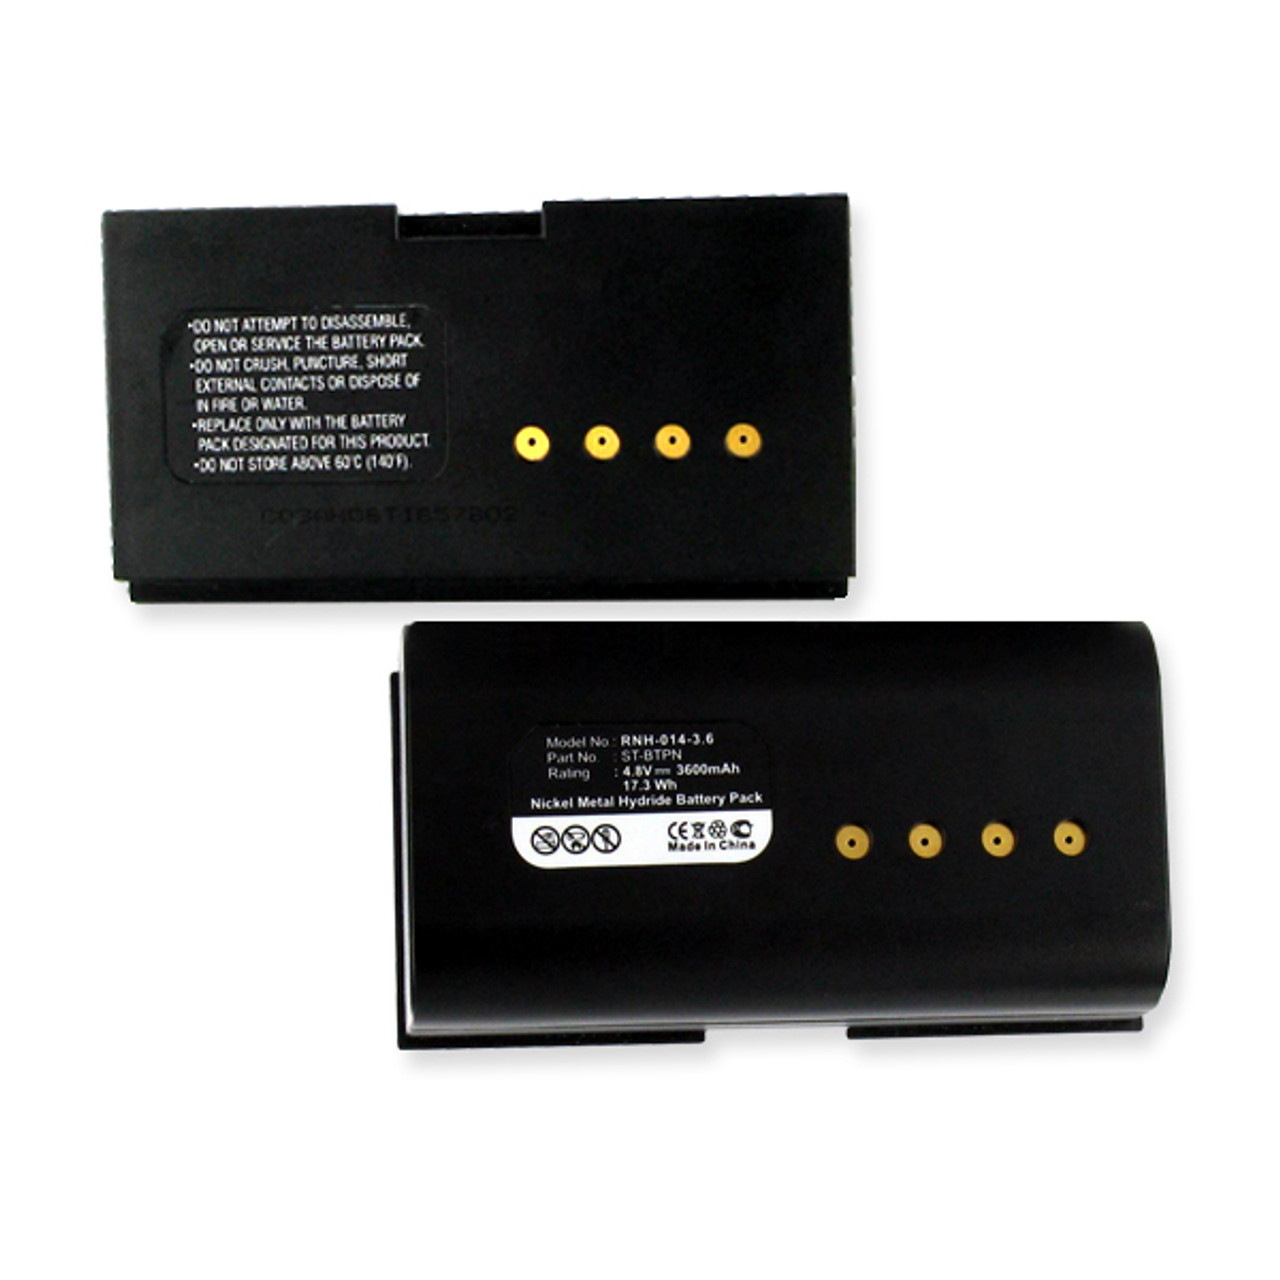 Crestron SmarTouch ST-1550C Remote Control Battery